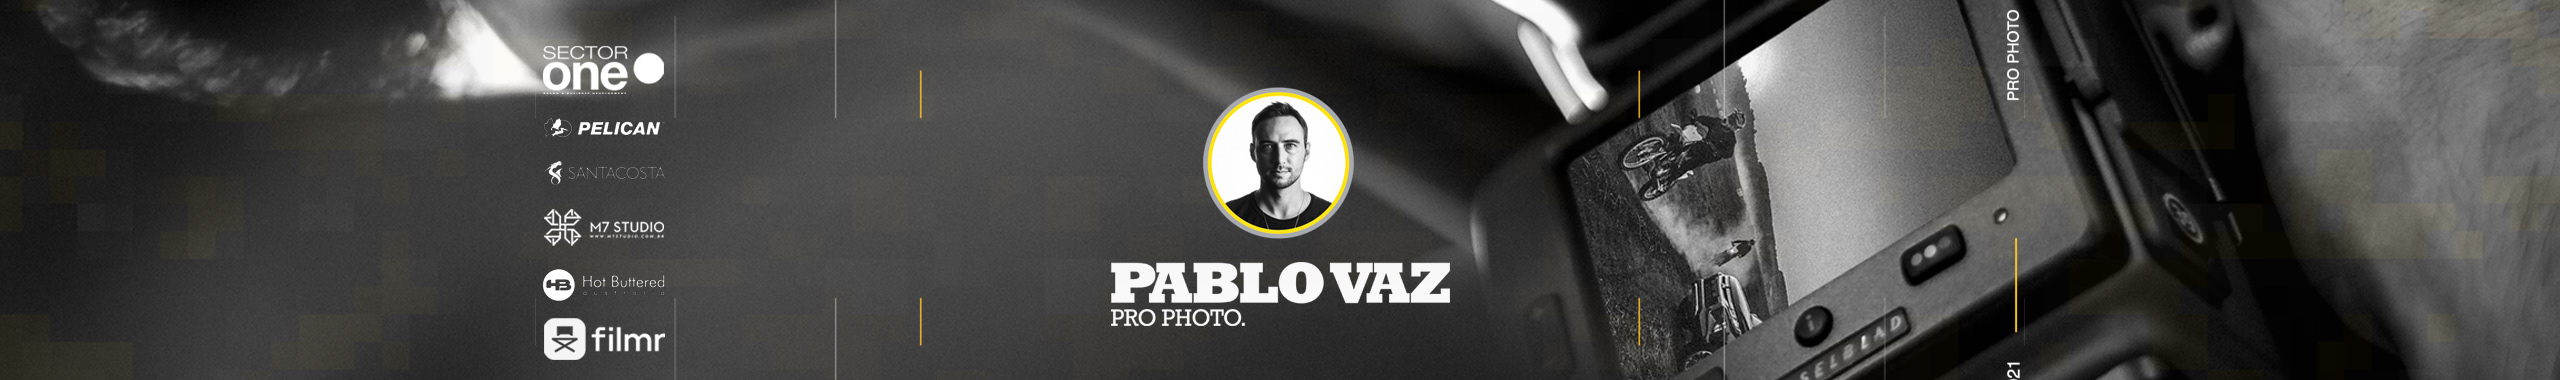 Pablo Vaz's profile banner